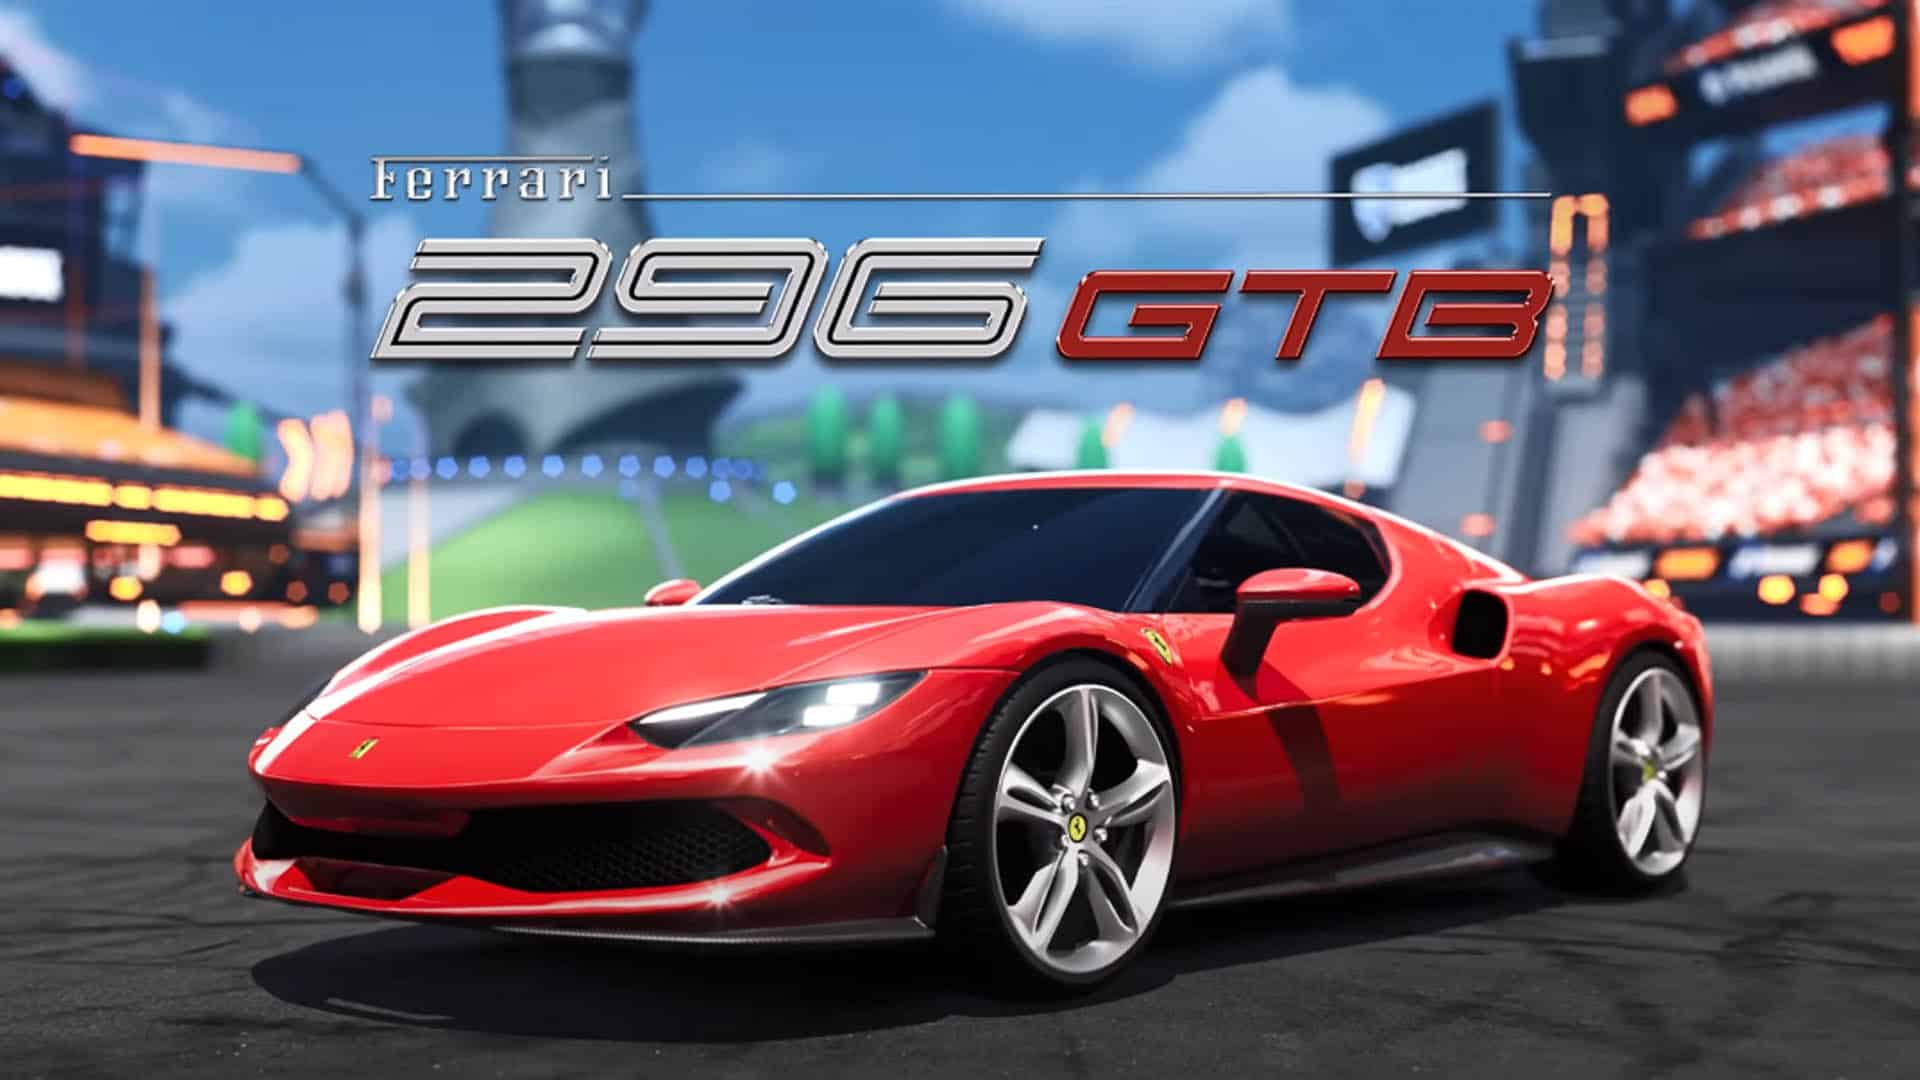 Ferrari's 296 GTB supercar is now in Rocket League 02